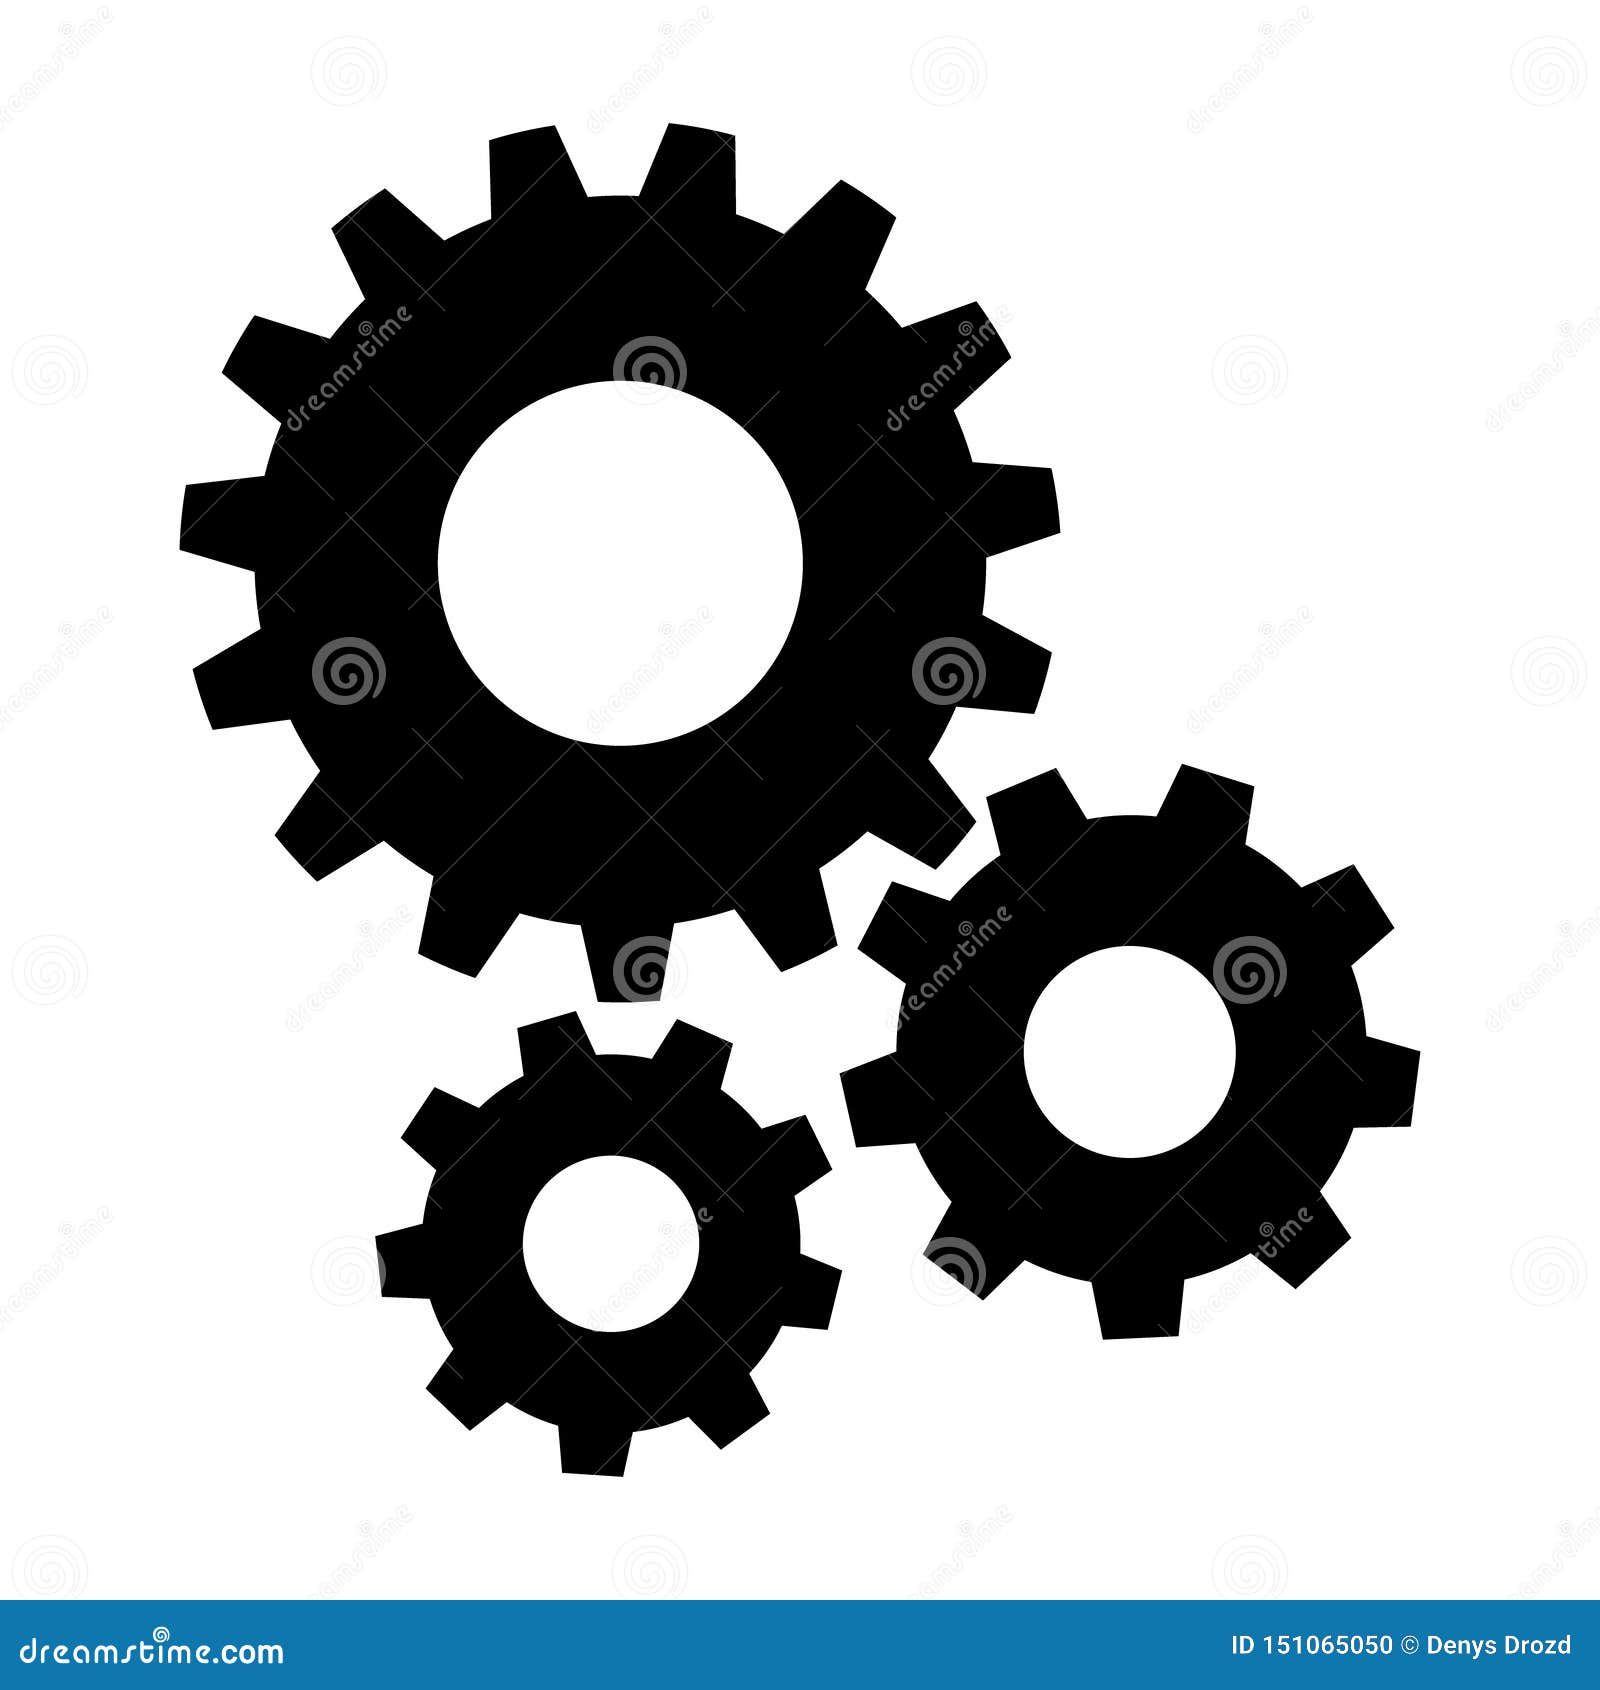 https://thumbs.dreamstime.com/z/settings-icon-gear-icon-vector-gear-symbol-illustration-web-sites-our-mobile-settings-icon-gear-icon-vector-gear-symbol-151065050.jpg